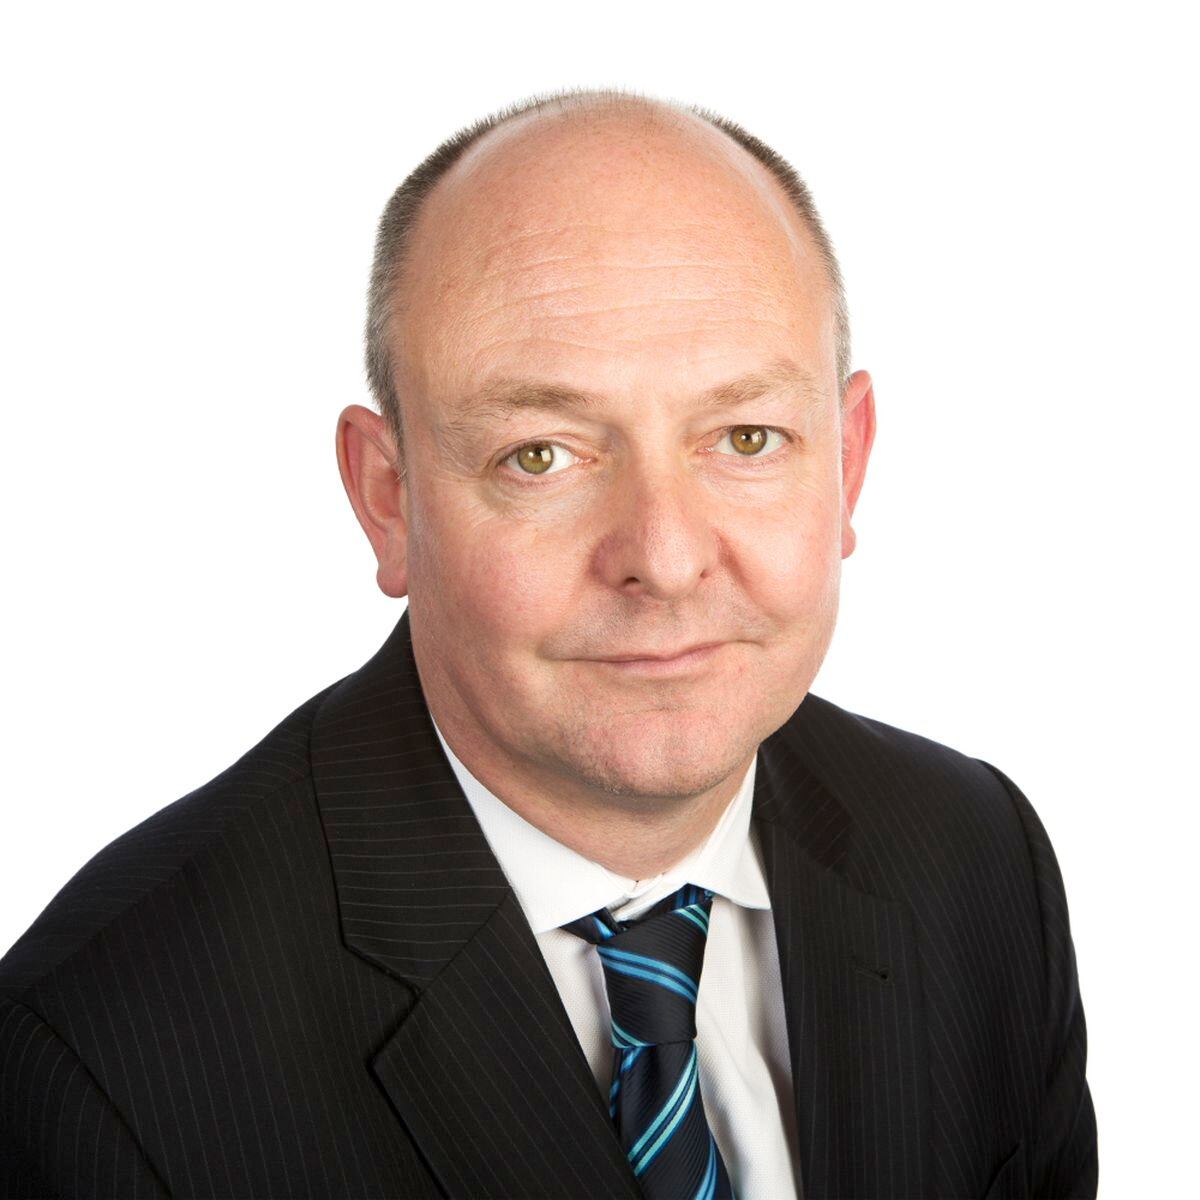 R3 Midlands chairman Chris Radford, a partner at law firm Gateley in Birmingham